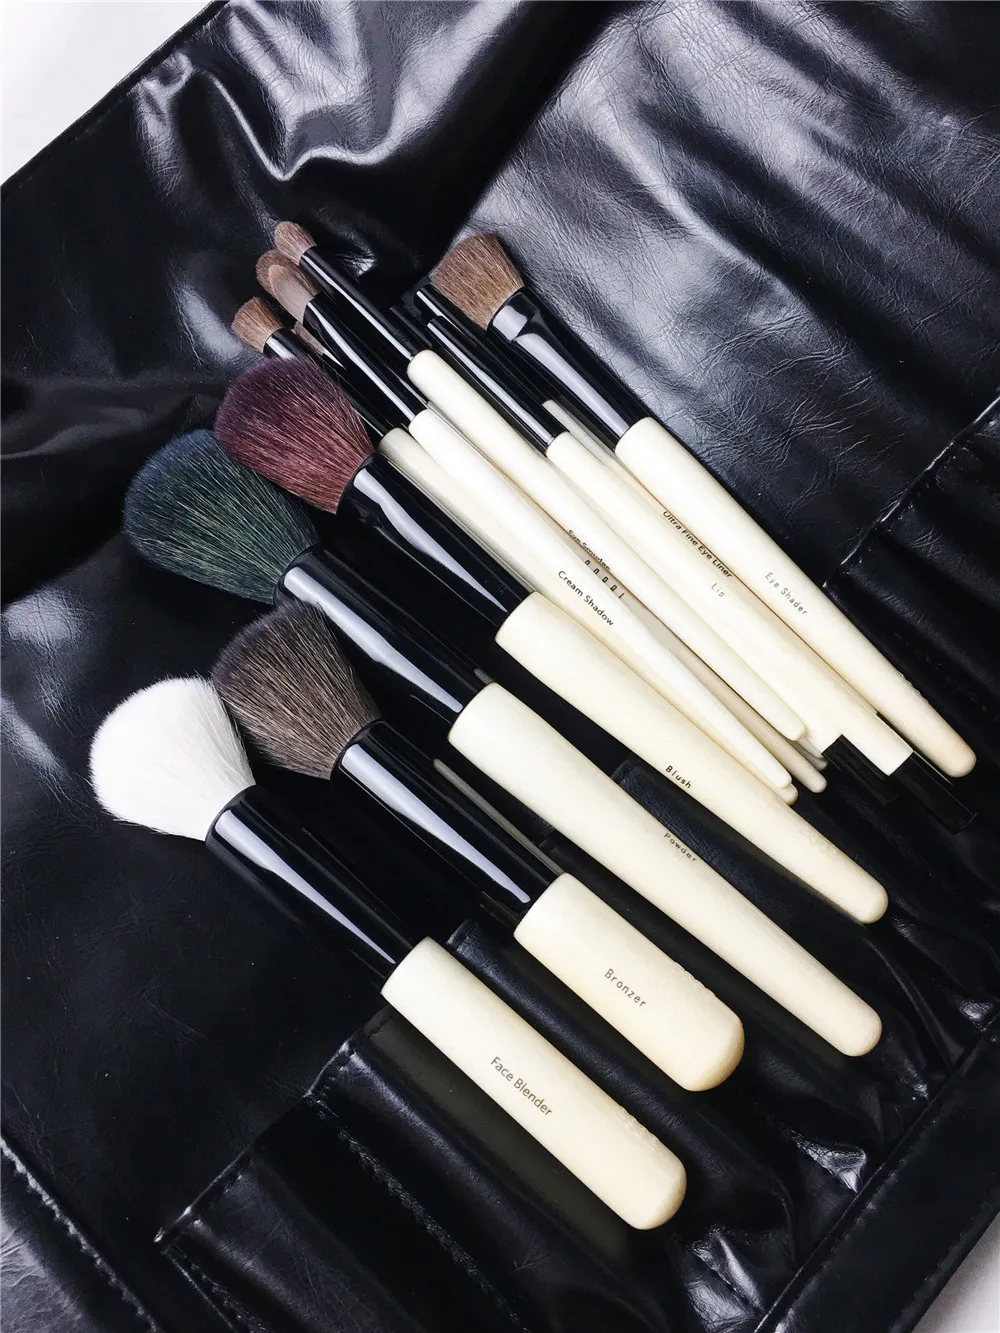 BB-SERIES 18-Brushes The Complete Brush set - Quality Wooden Handle Brush kit - Beauty Makeup Brushes Blender Tool